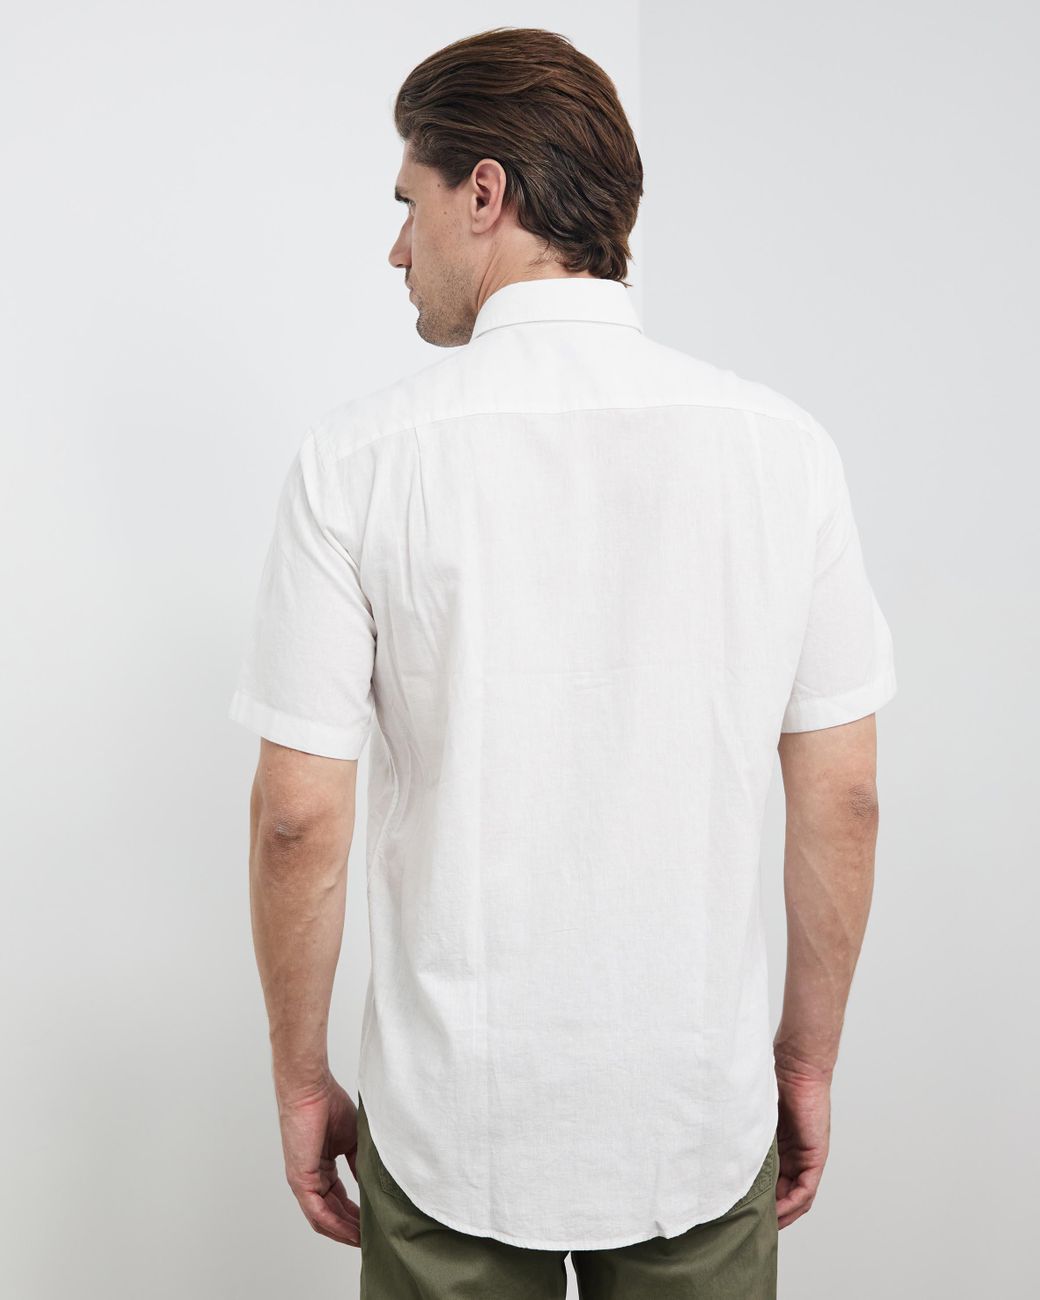 RM Williams Hervey Shirt - Navy/White Check